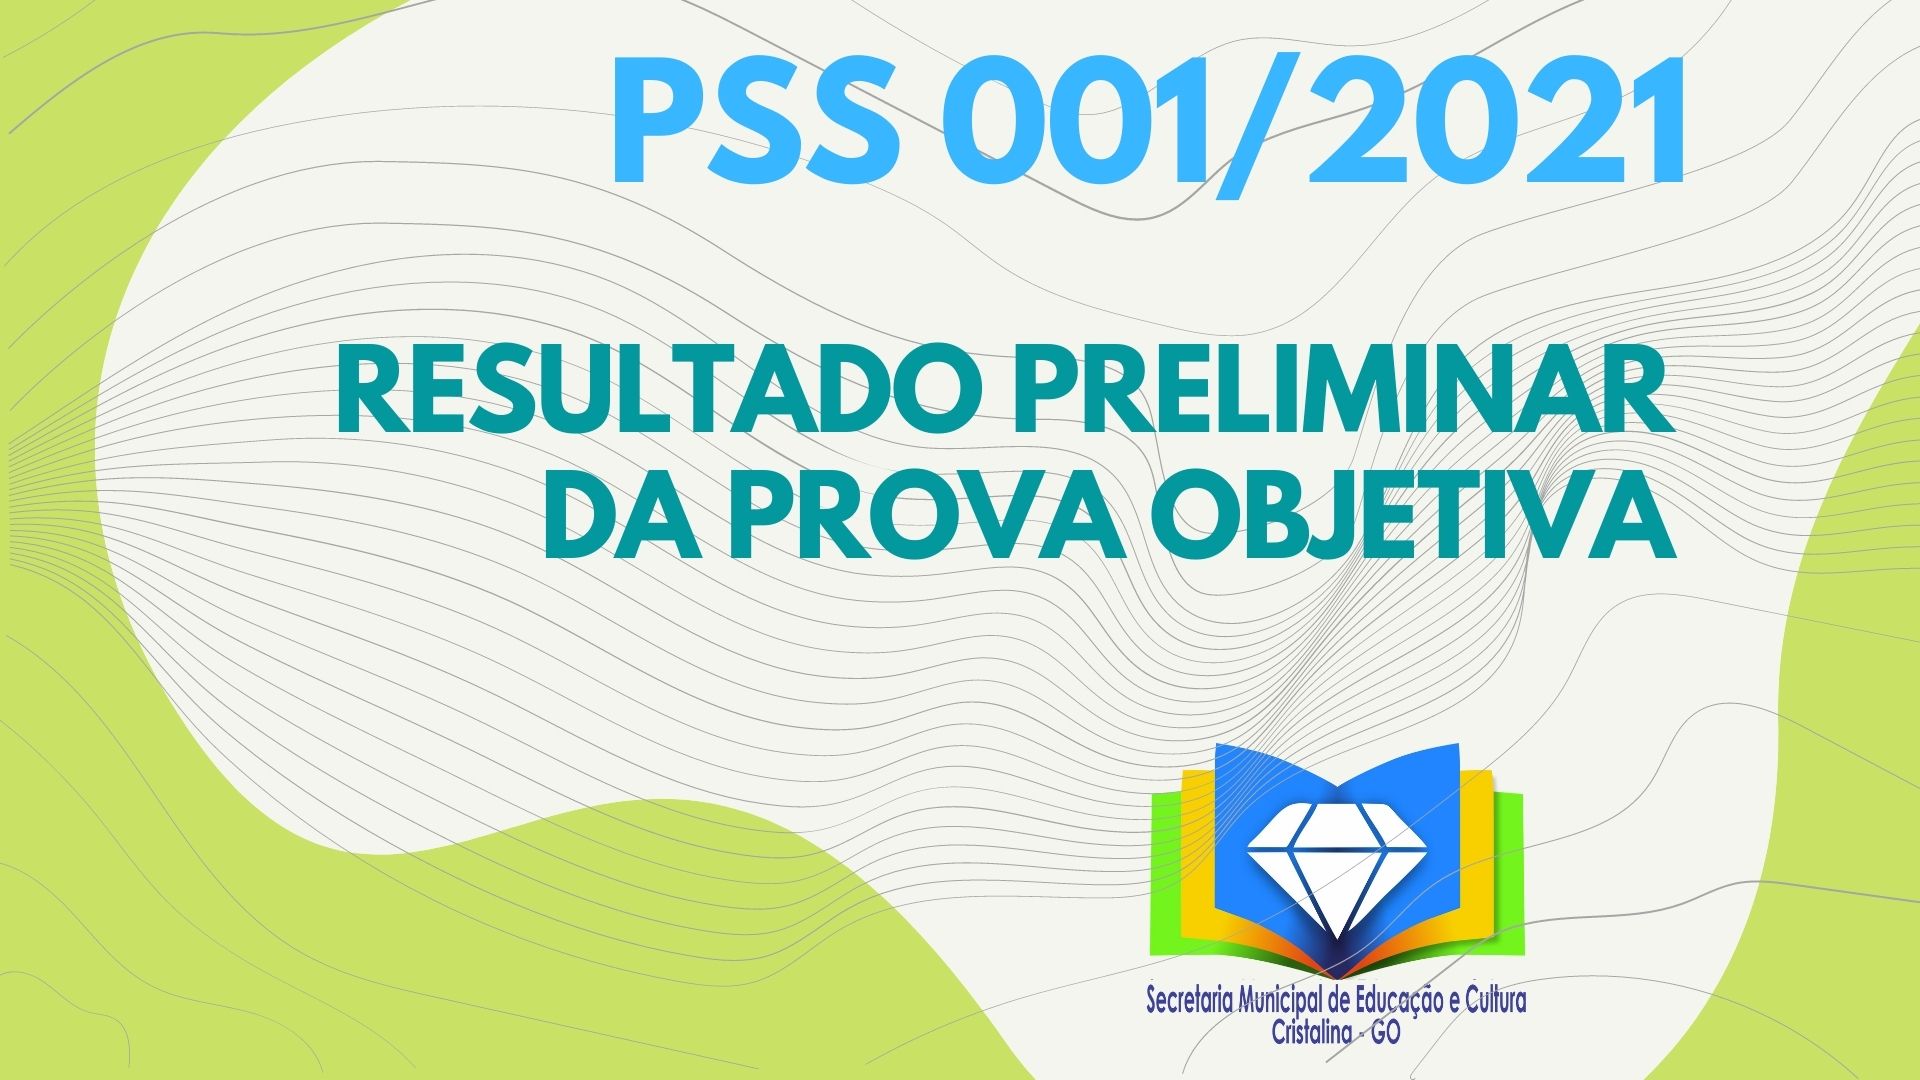 RESULTADO PRELIMINAR DA PROVA OBJETIVA PSS 001/2021